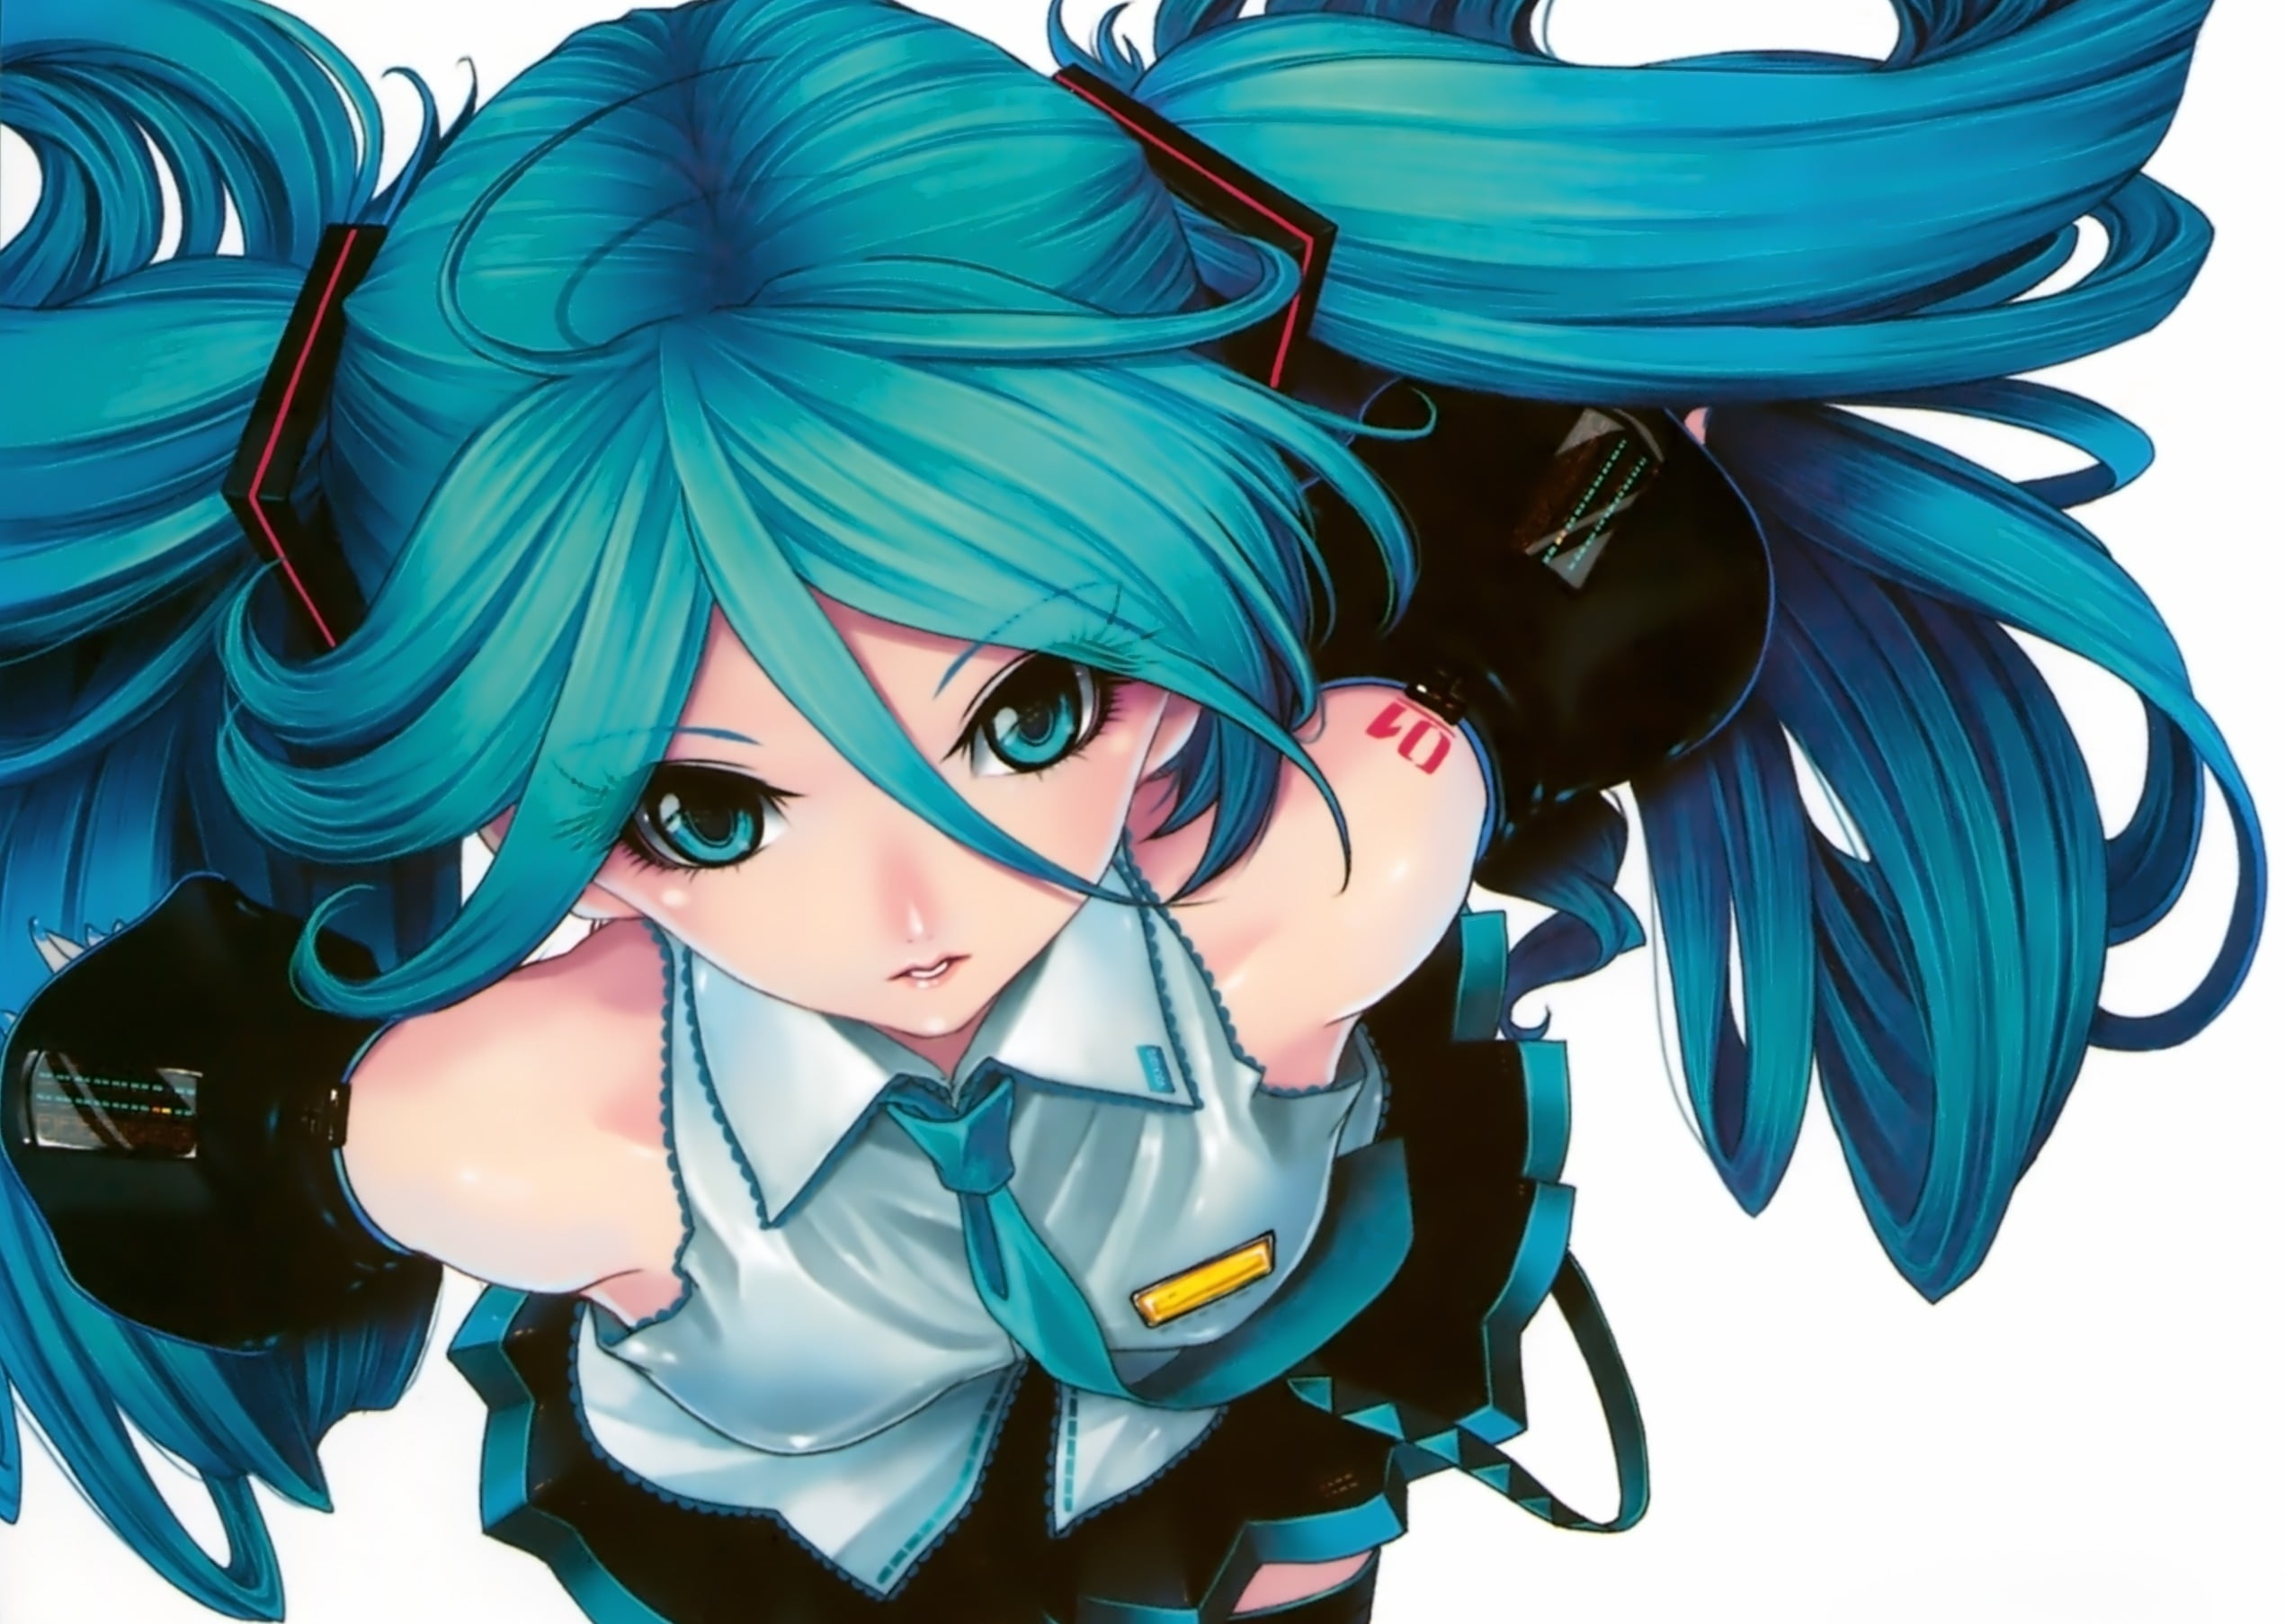 GreenTurquoise Haired Anime Characters  Anime Fan Art 34758255  Fanpop